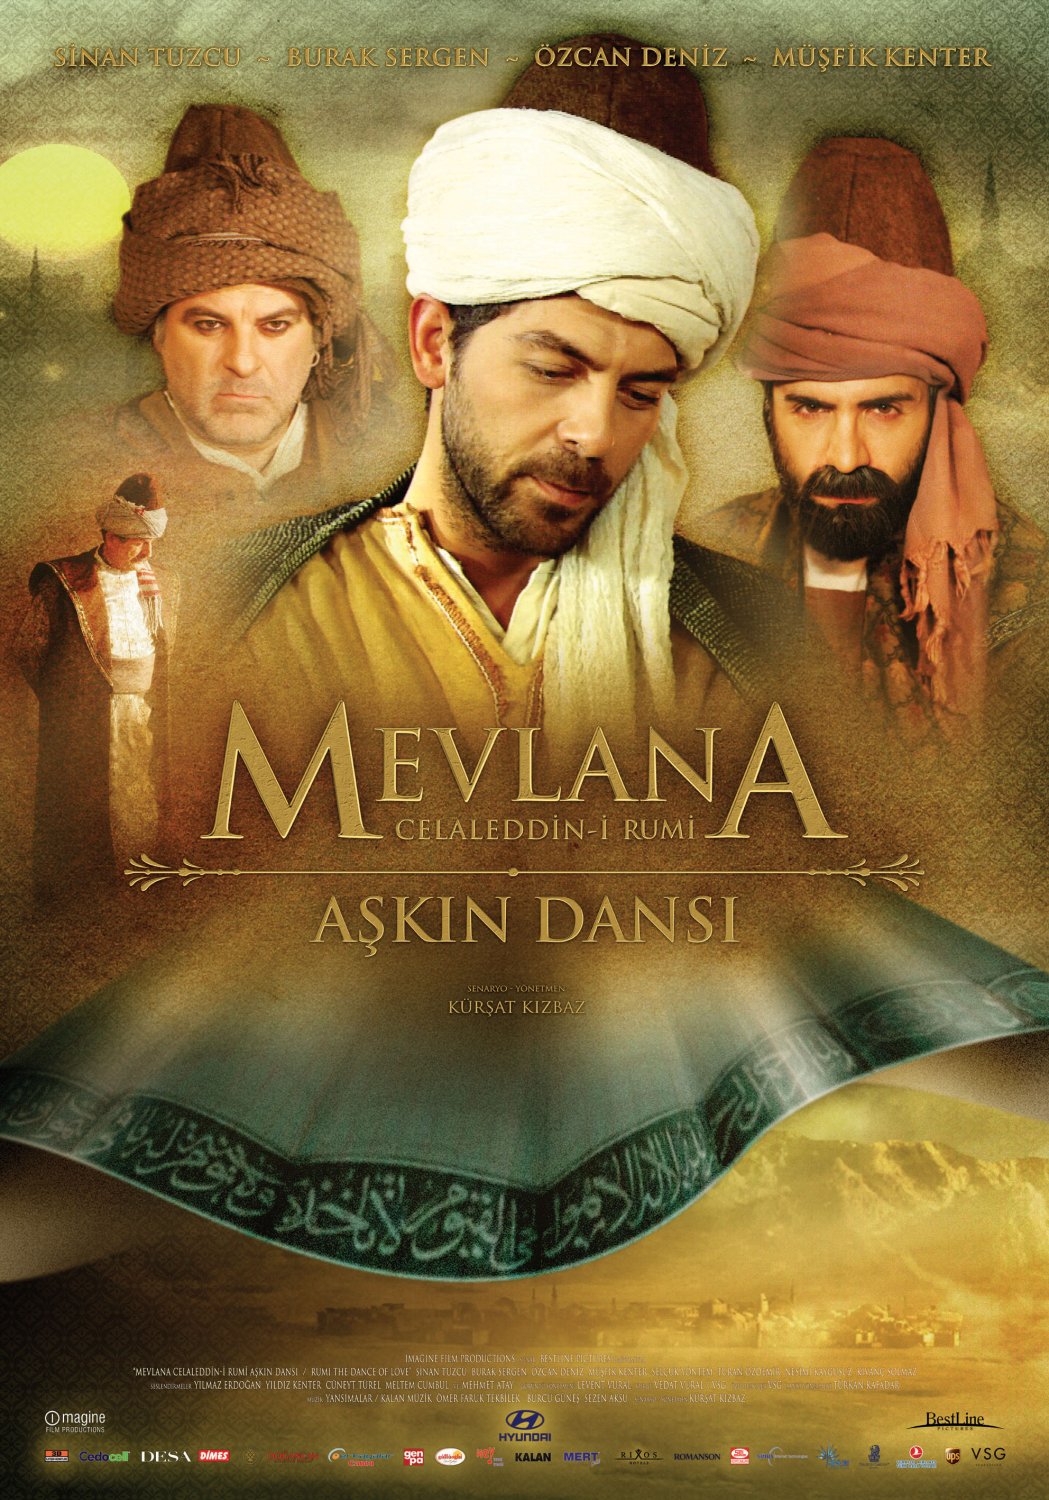 Extra Large Movie Poster Image for Mevlana Celaleddin-i Rumi: Askin dansi 